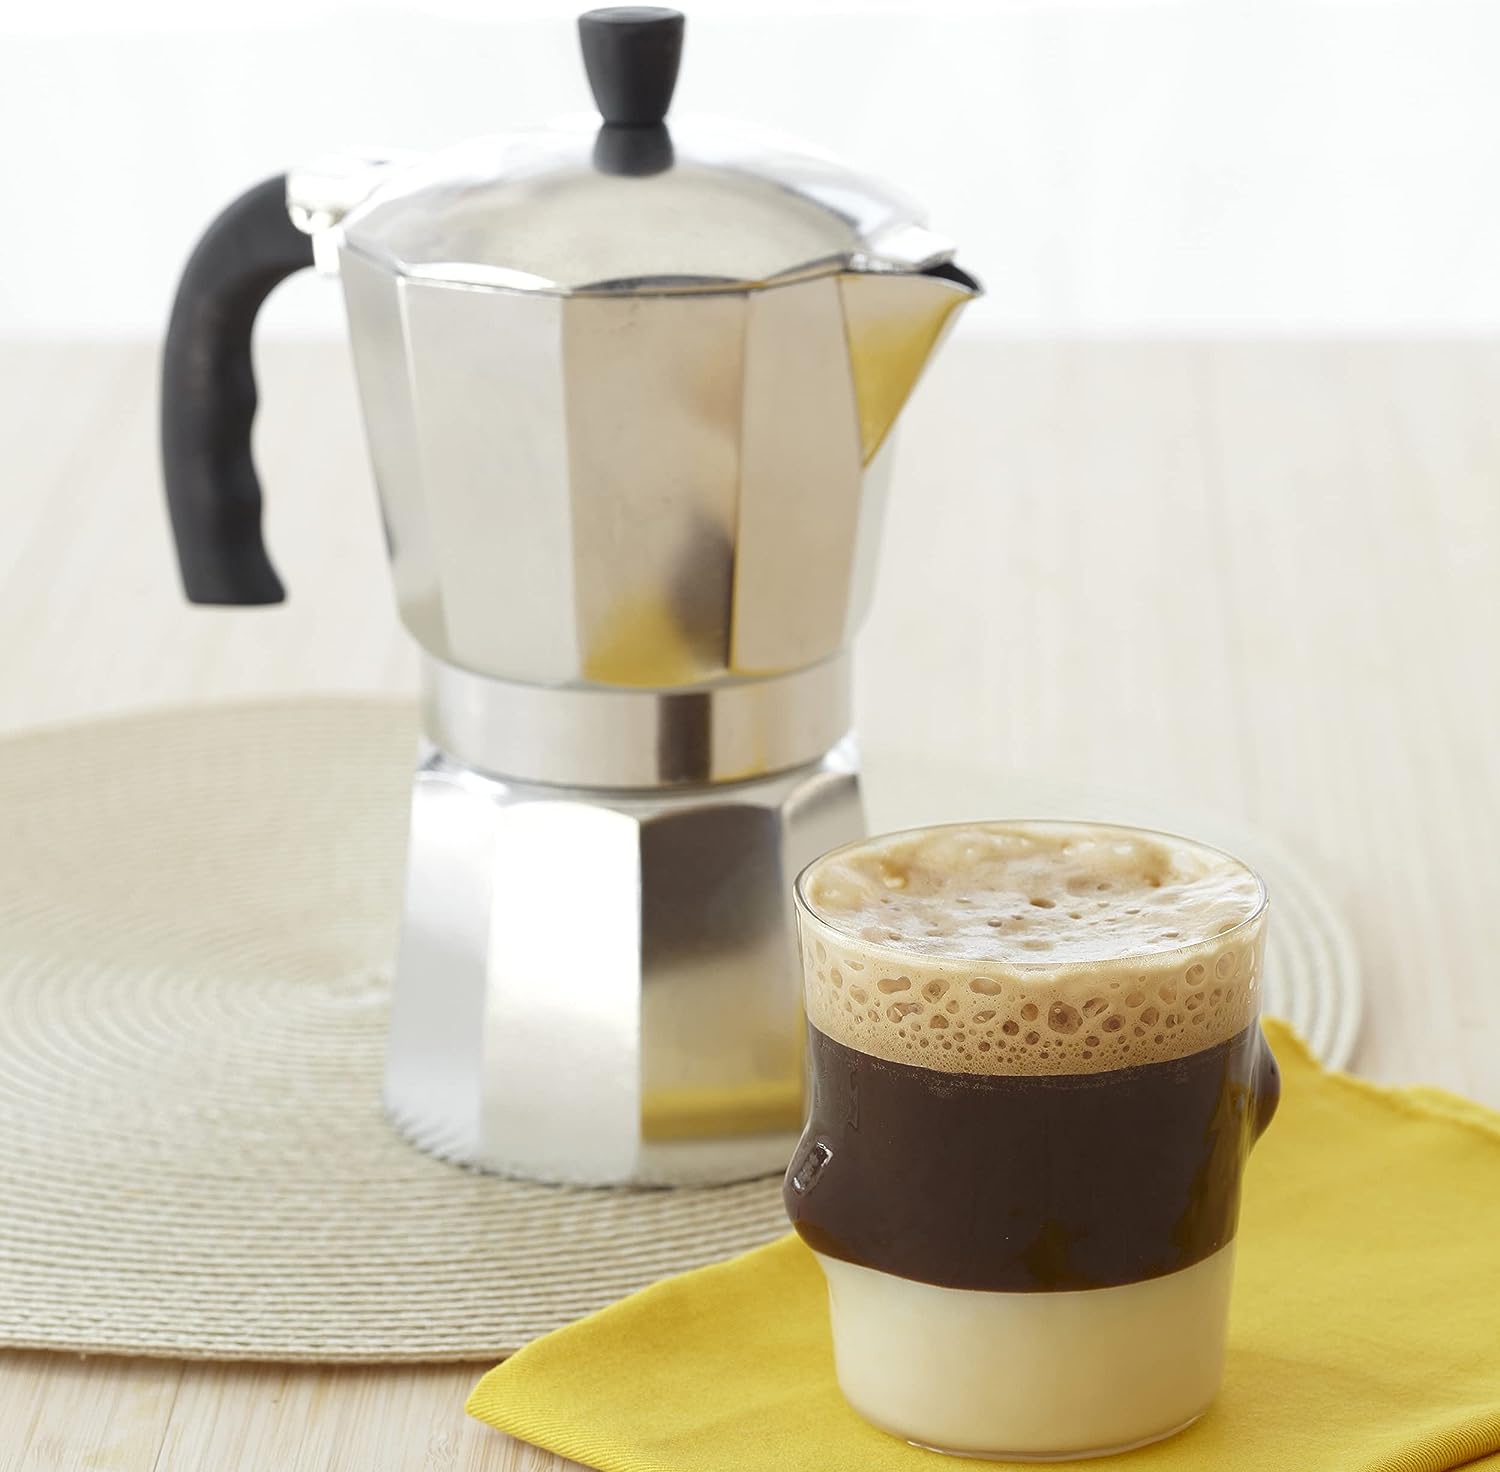 IMUSA USA B120-42V Aluminum Espresso Stovetop Coffeemaker 3-Cup Review